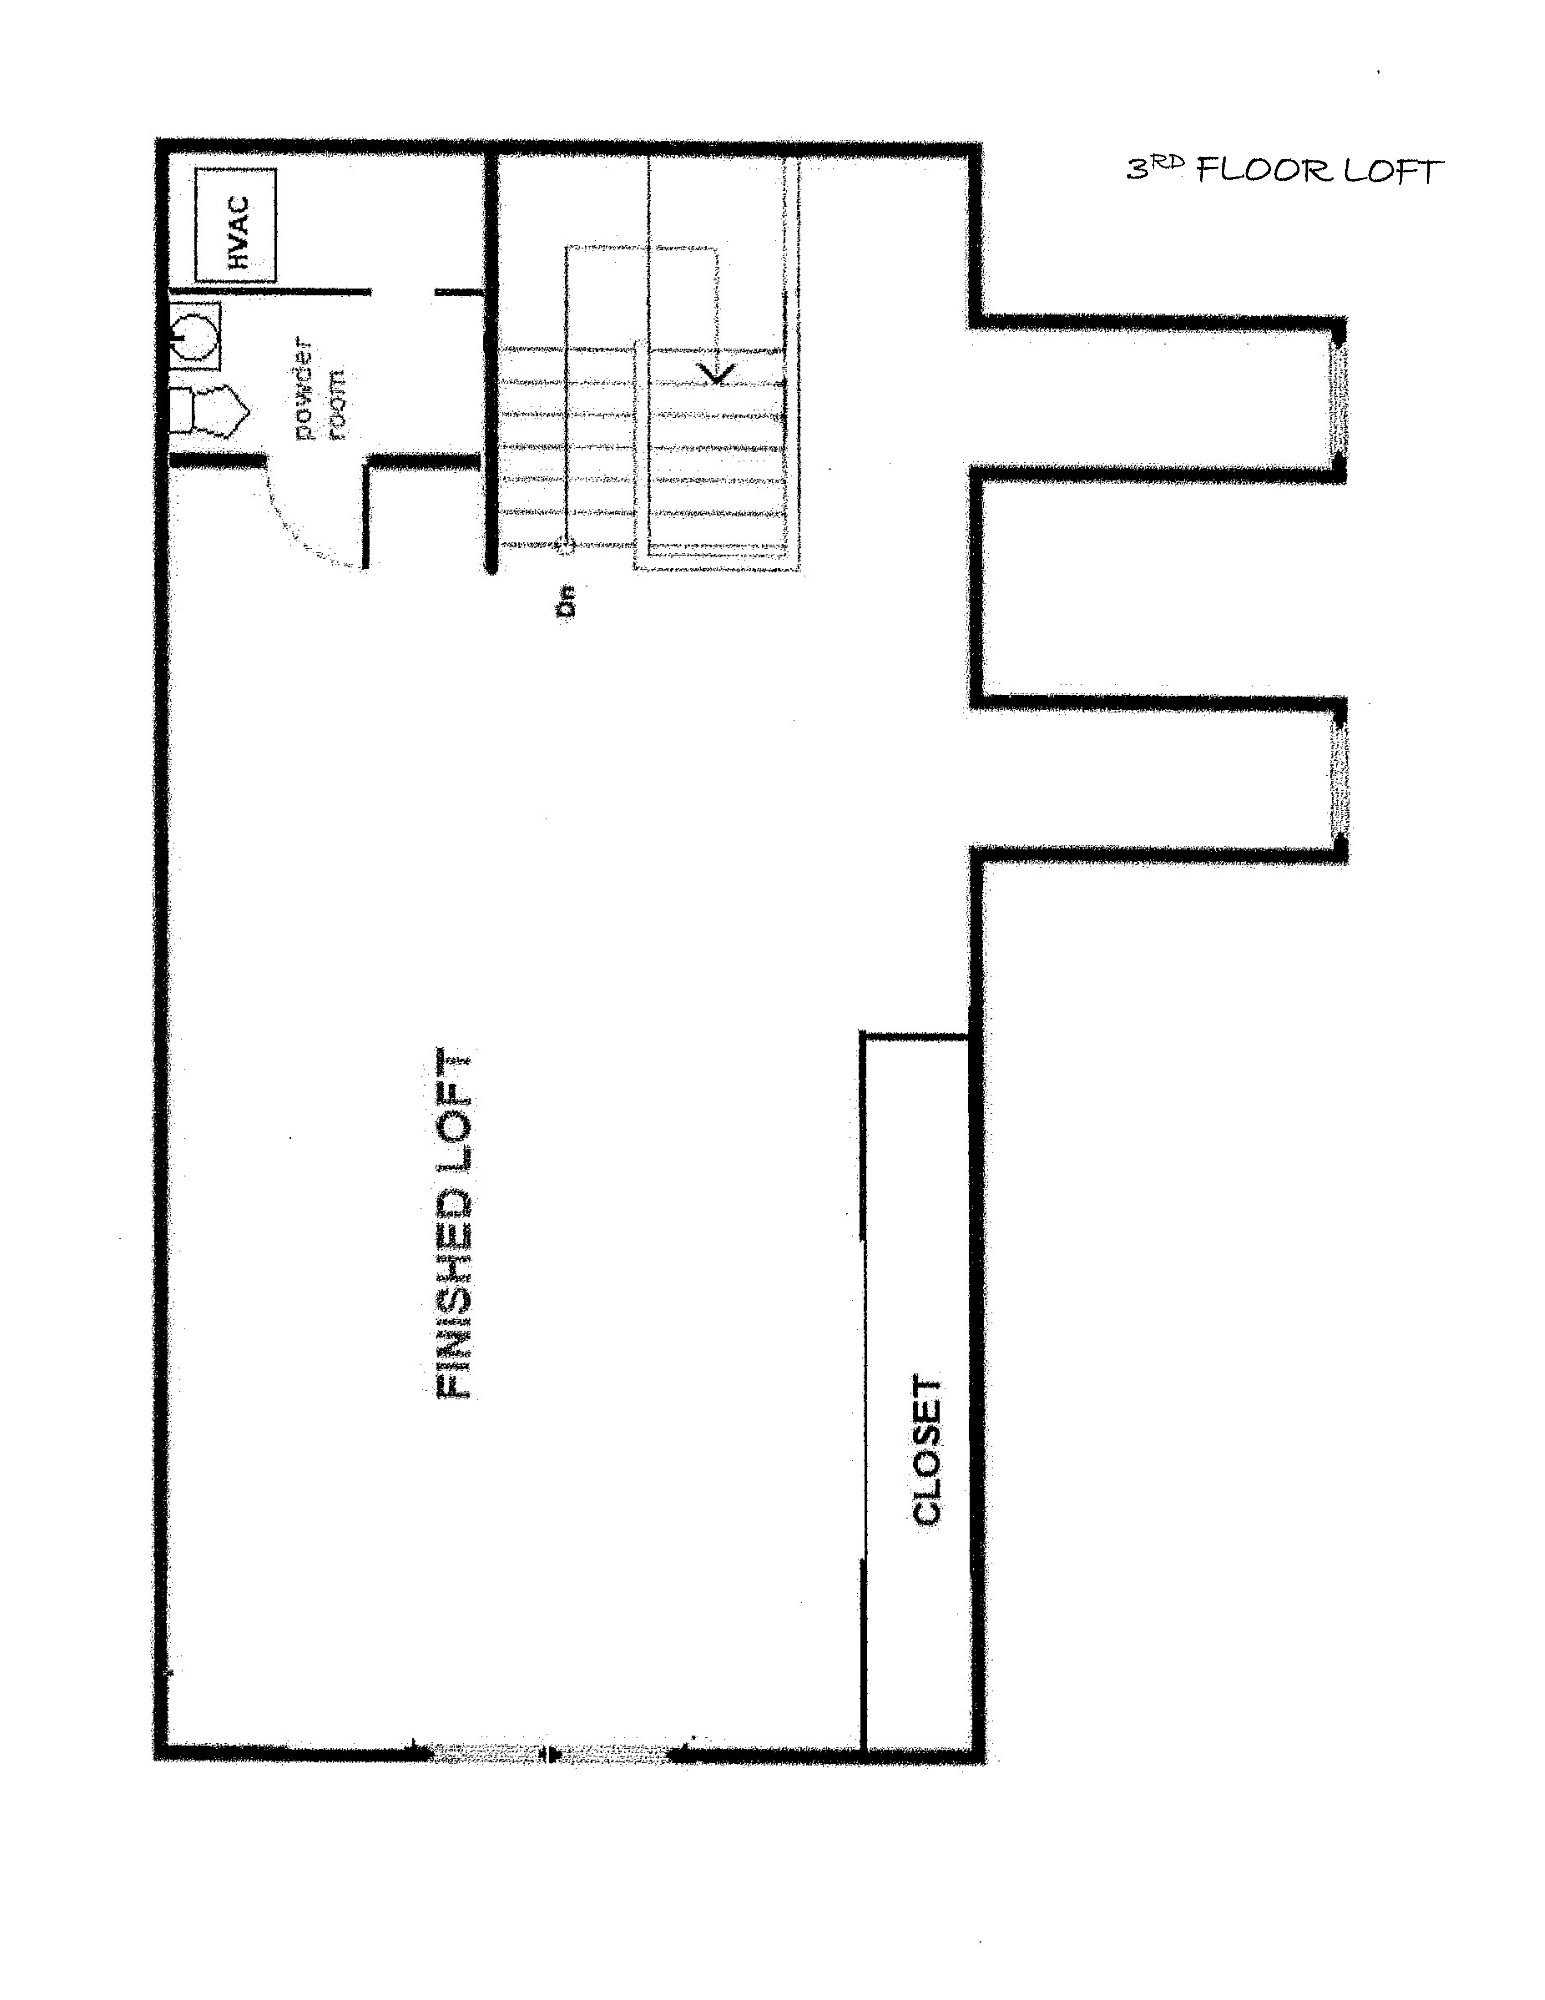 Madison Floor Plan Delancey Court 3rd Floor